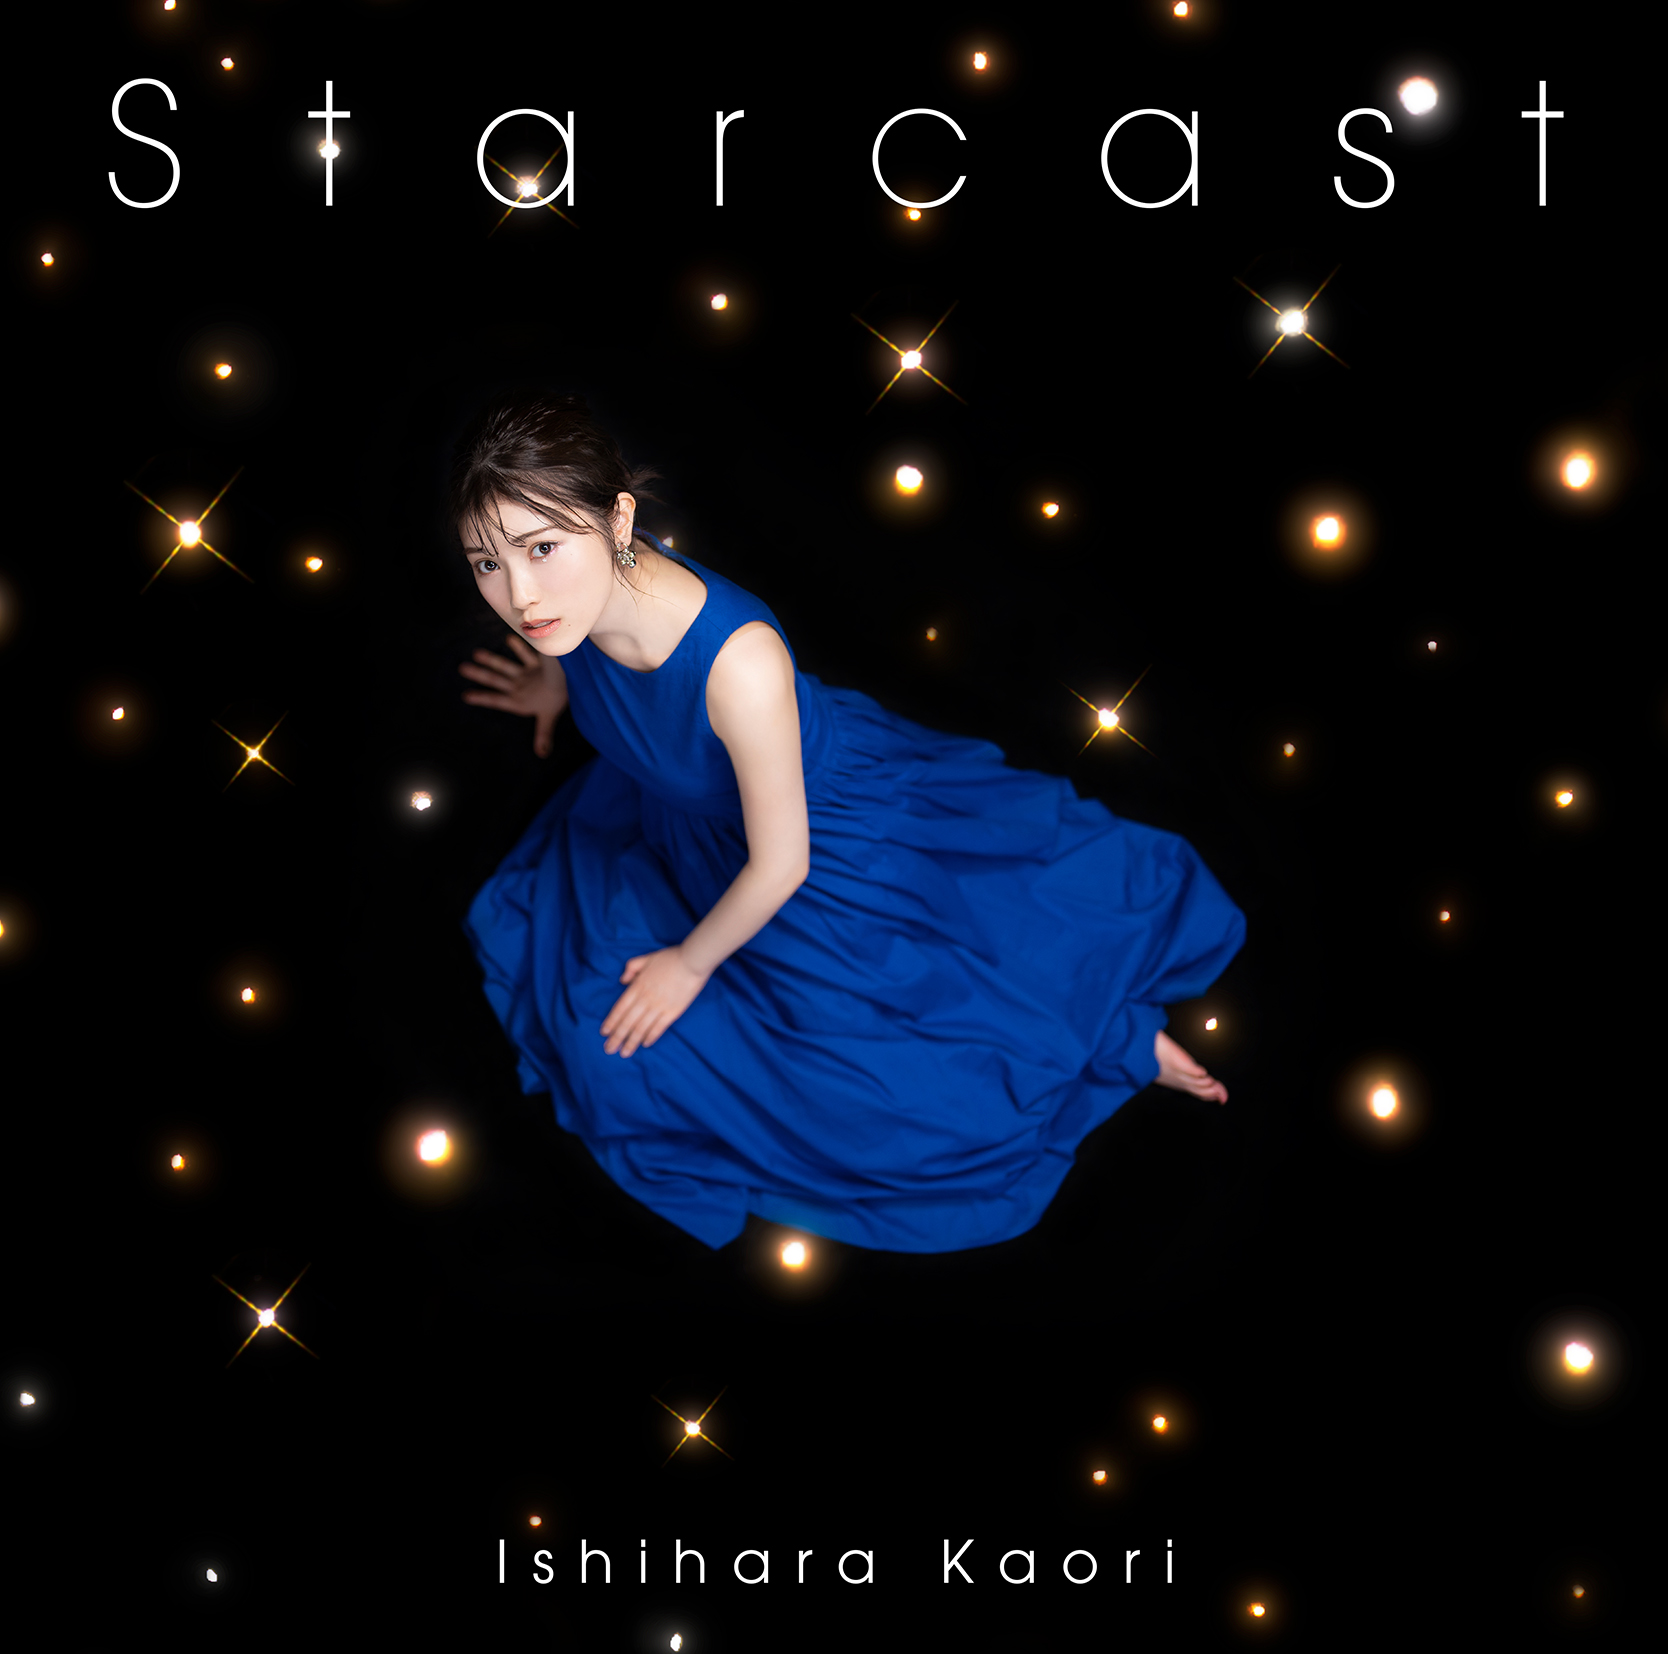 Ishihara Kaori 7th Single "Starcast" Limited Edition (CD+DVD)  Release on Nov 24th 2021